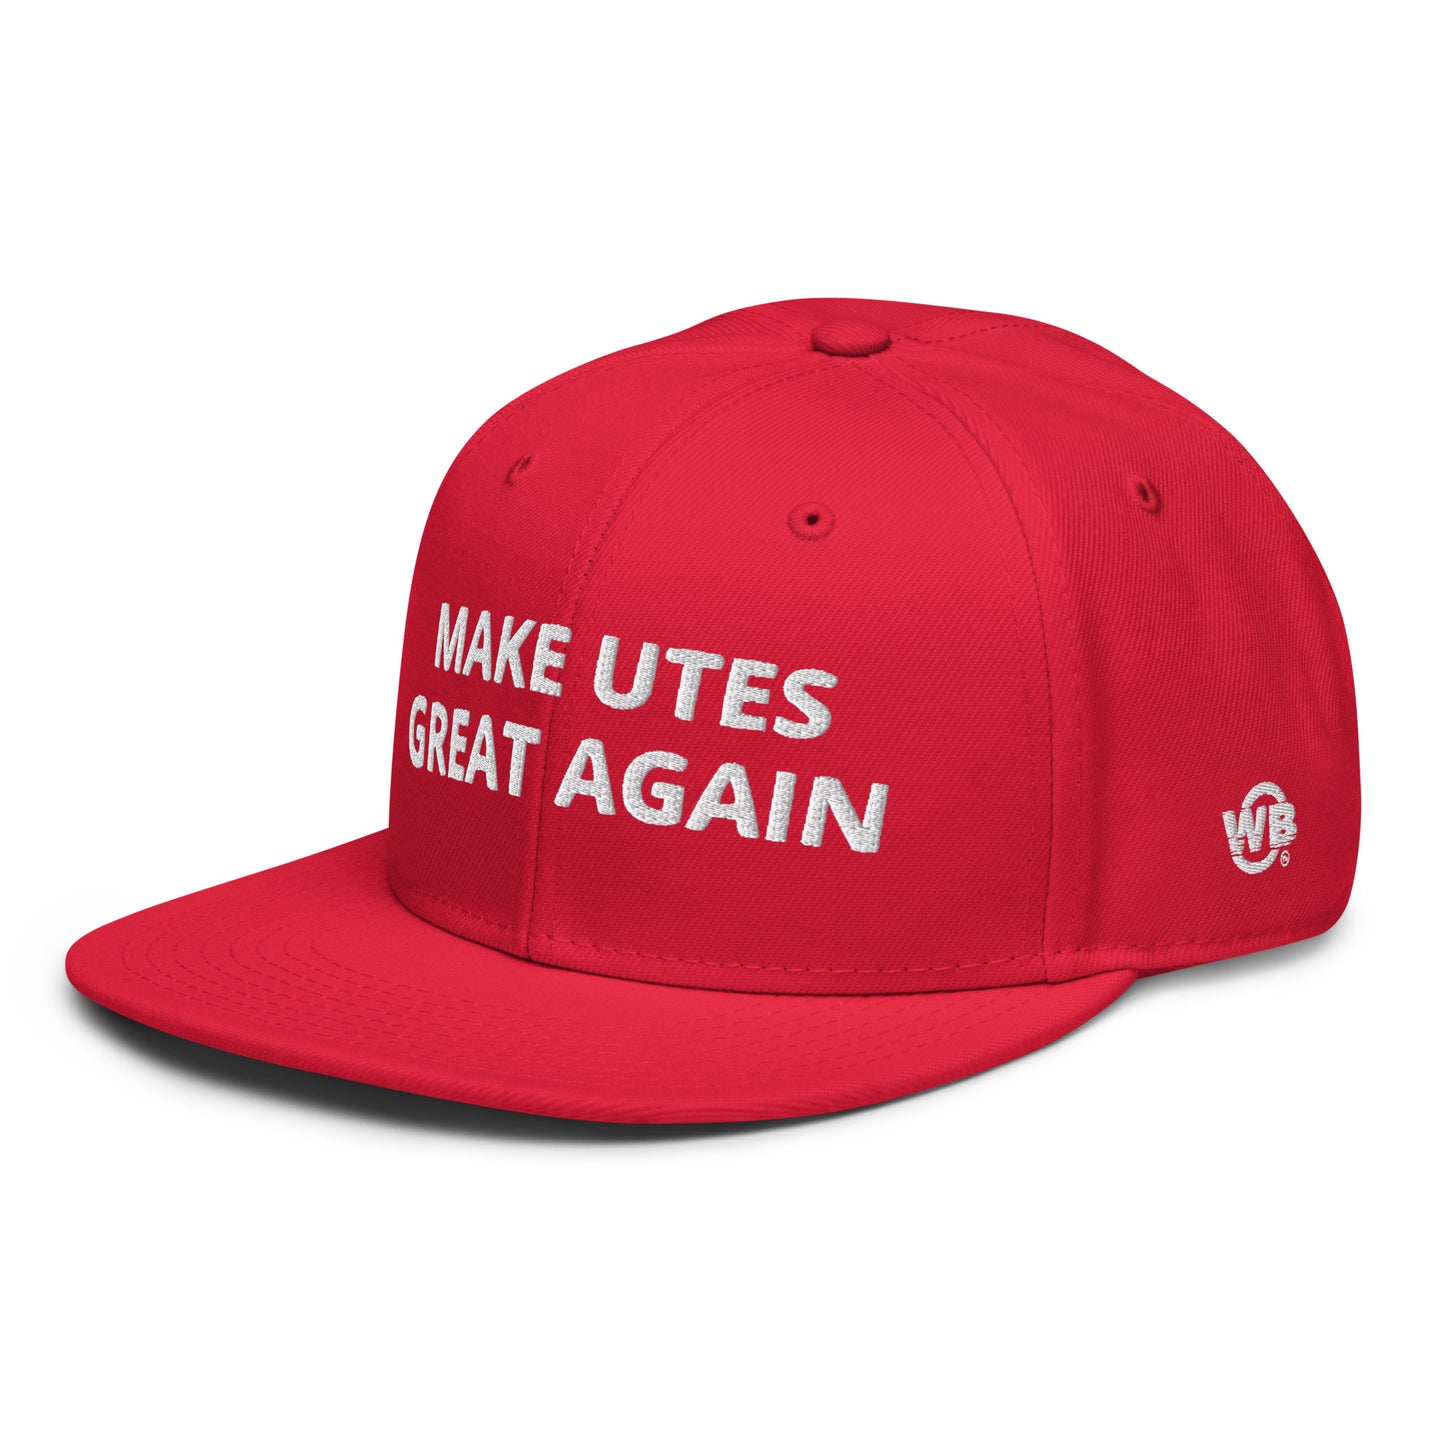 Make Utes Great Again Snapback Hat